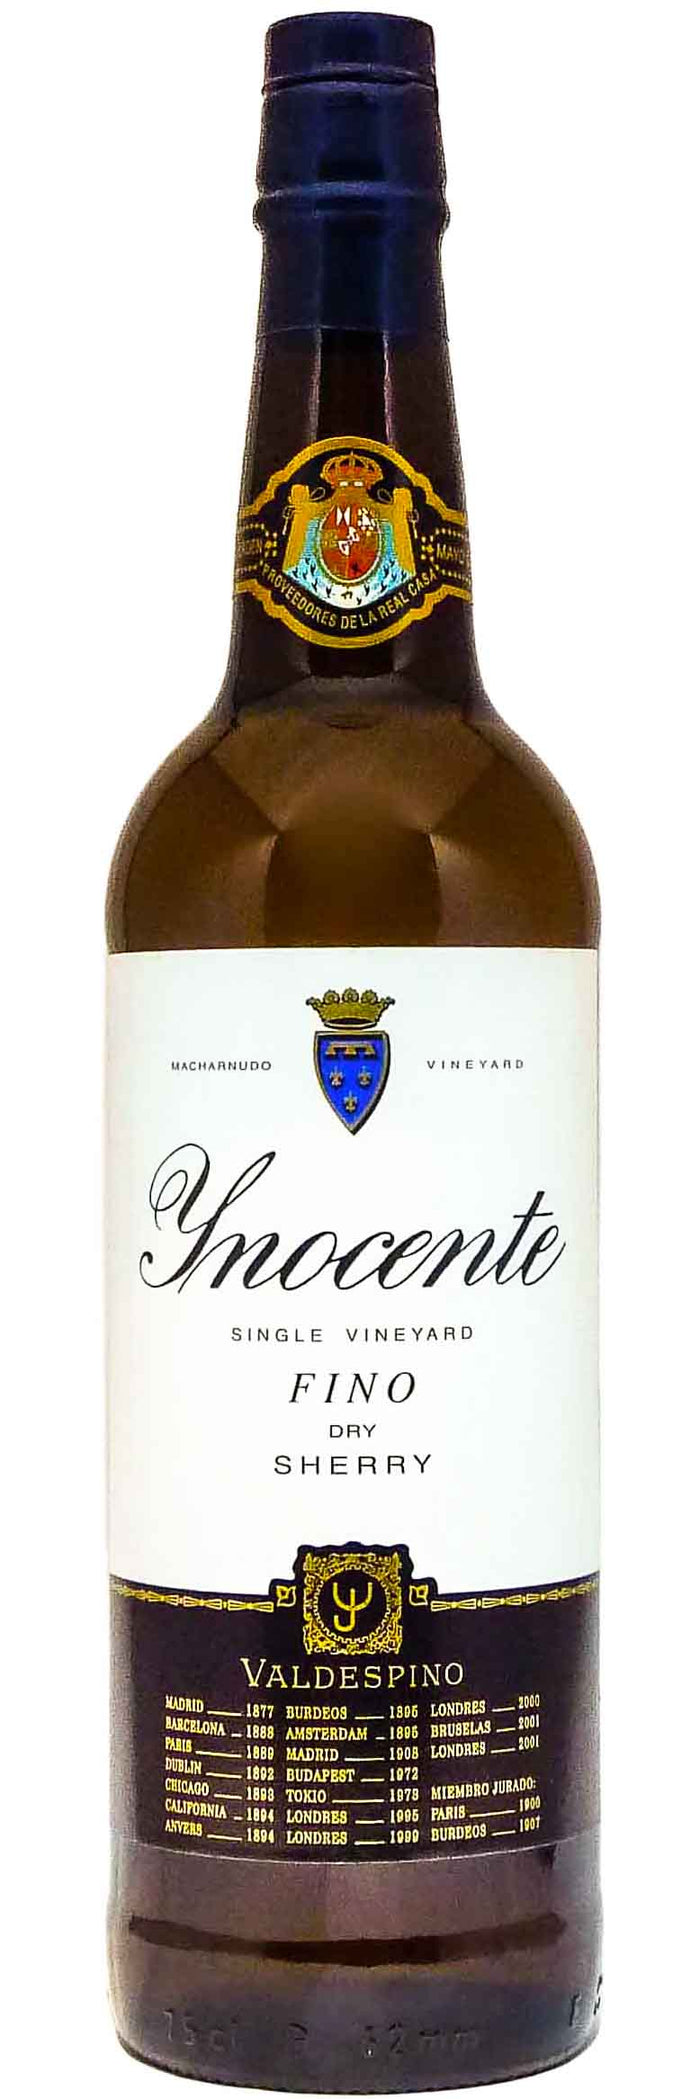 Valdespino Fino Sherry "Inocente"